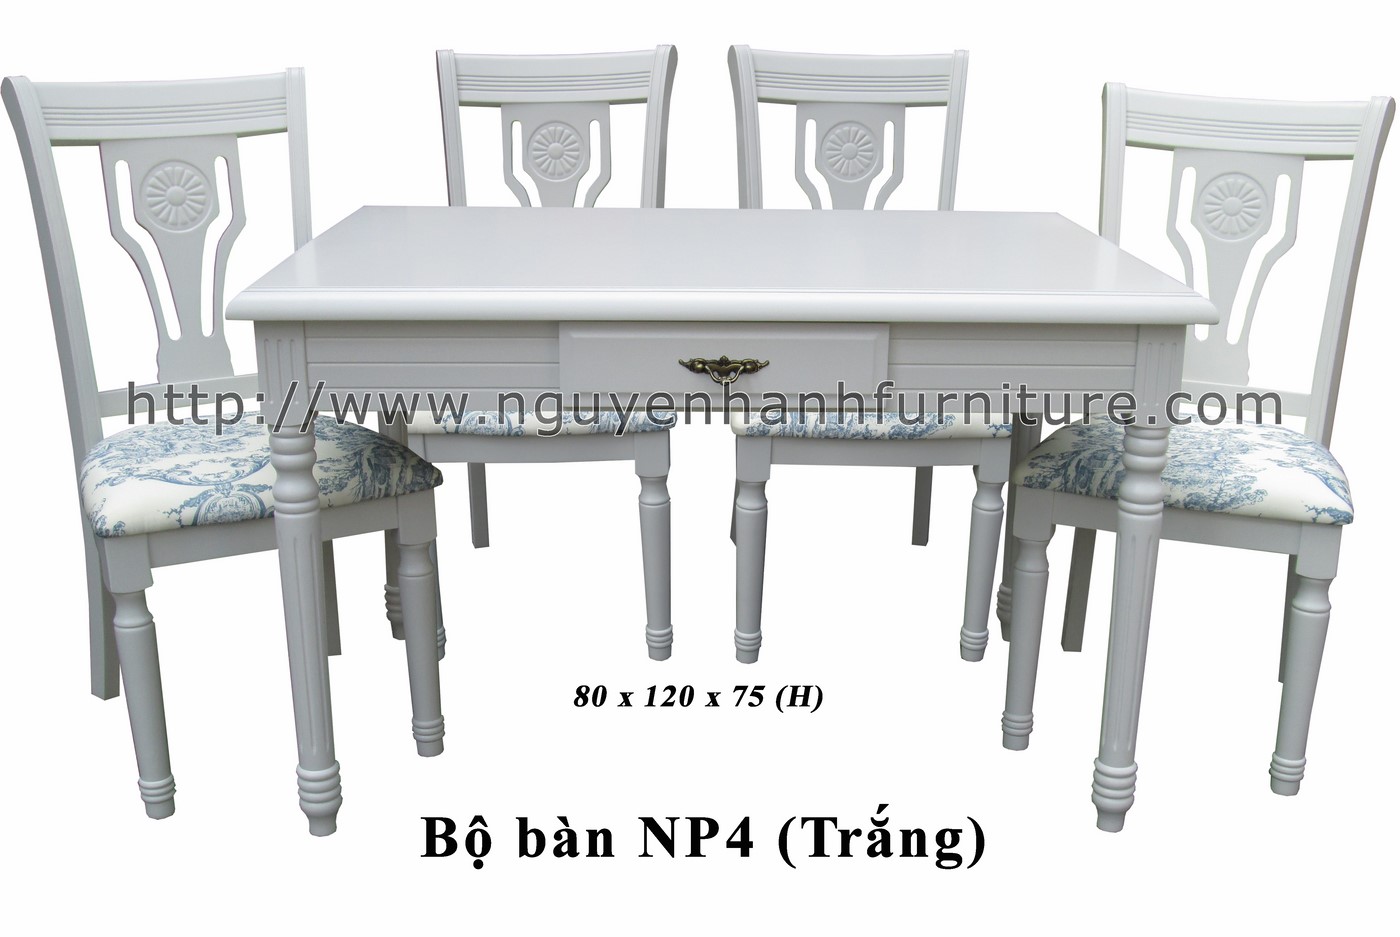 Name product: NP4 sets - Dimensions: 80 x 120 x 75 - Description: Wood natural rubber